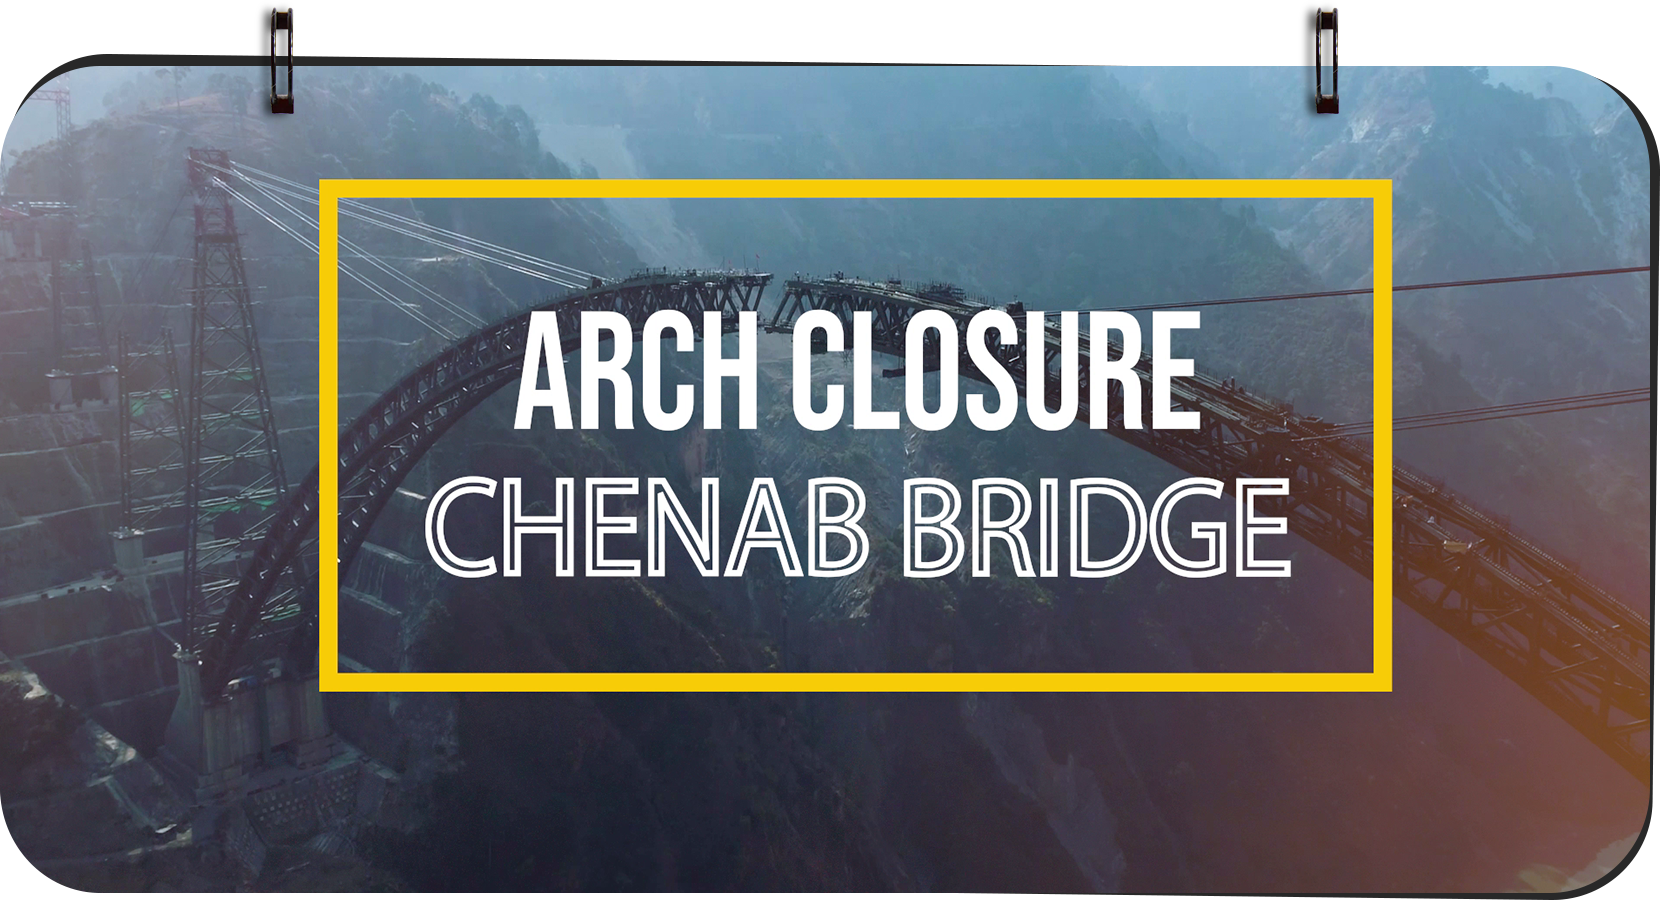 Arch Closure - Chenab Bridge